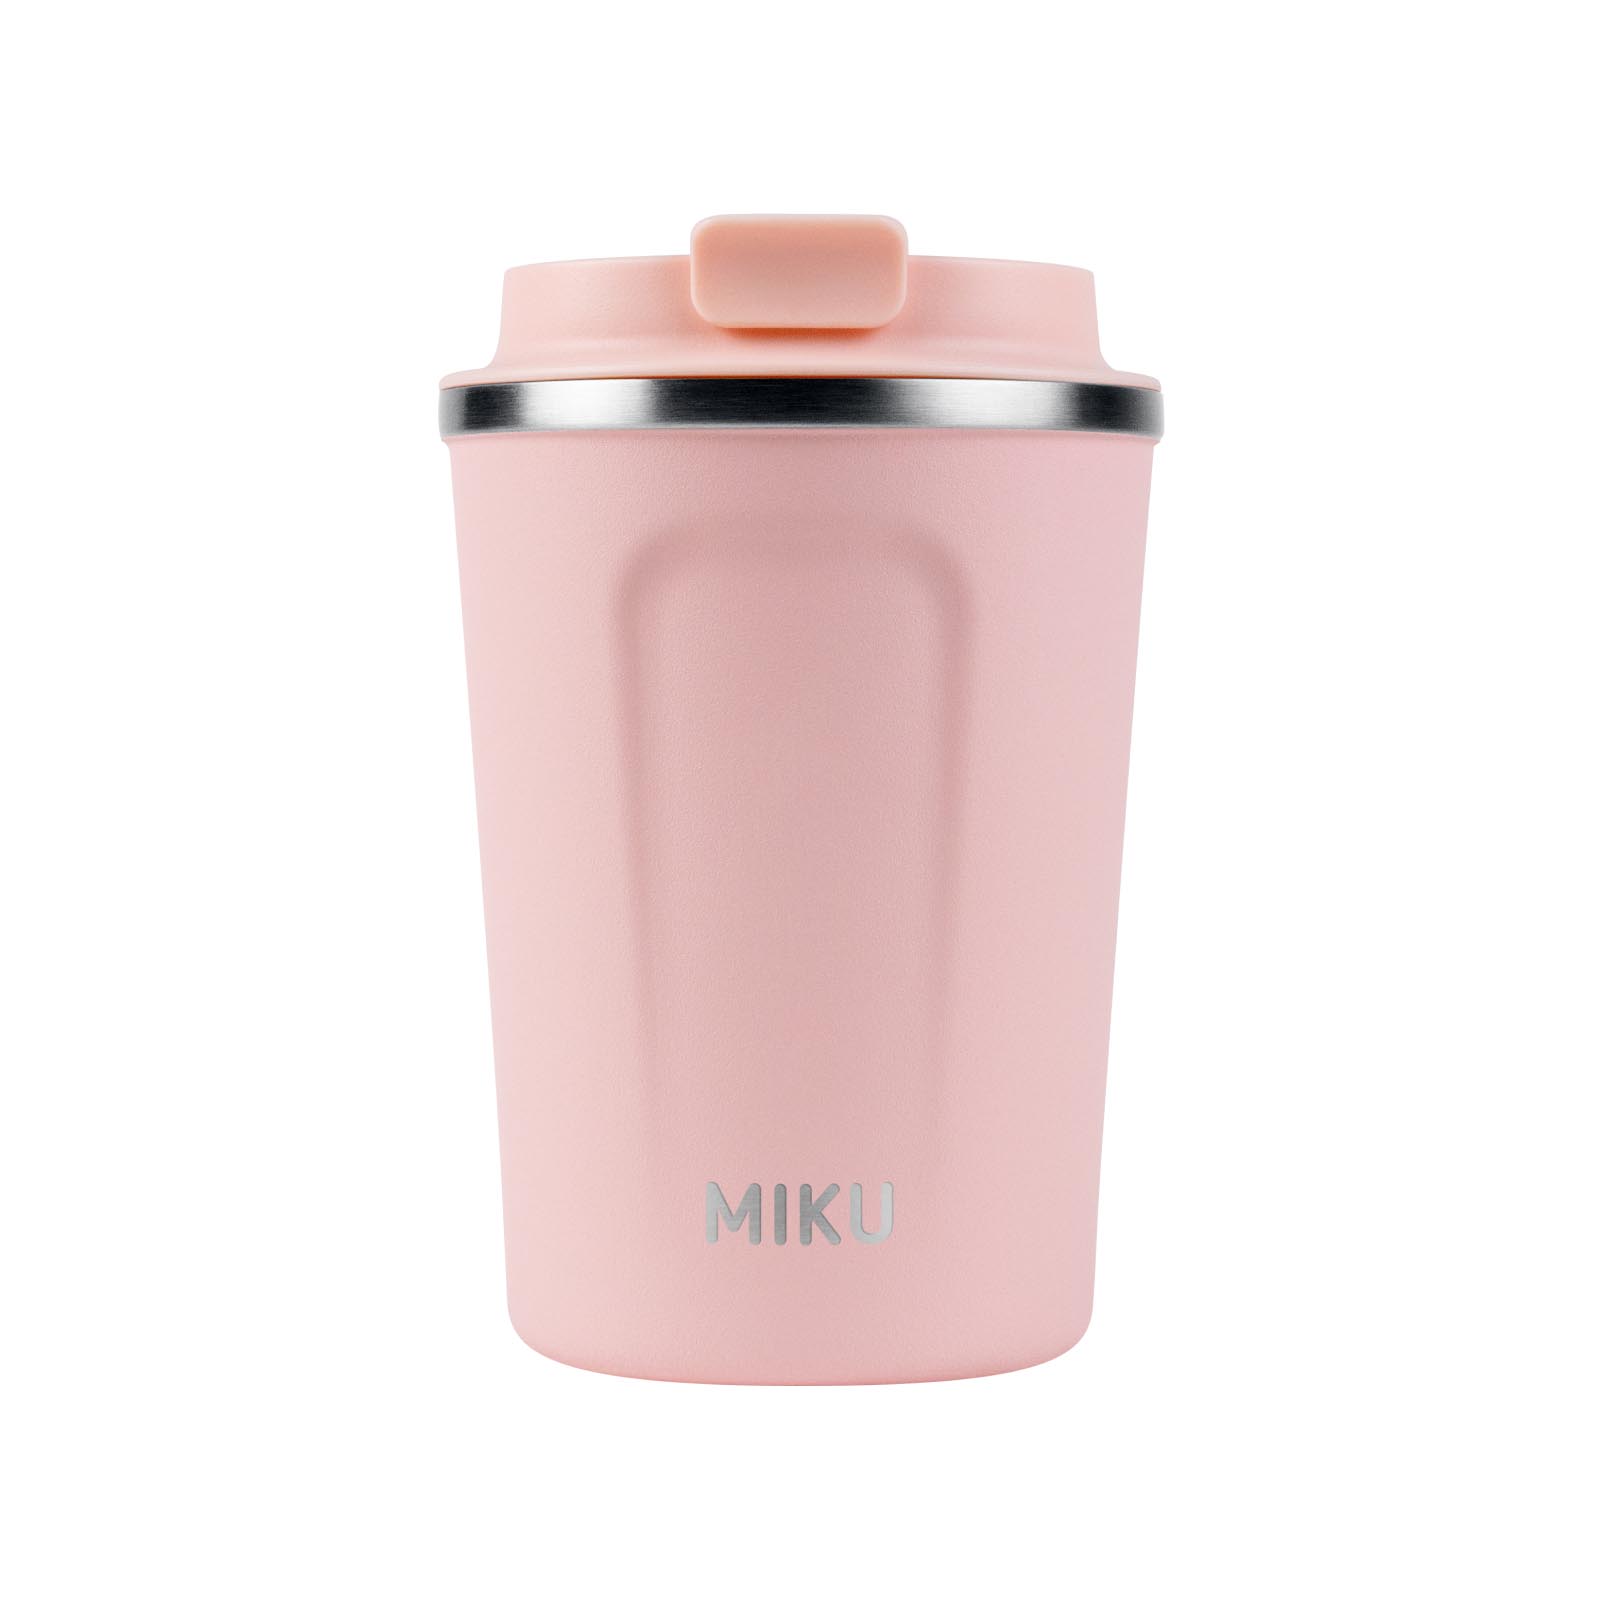 Термокружка MIKU 380 мл розовая